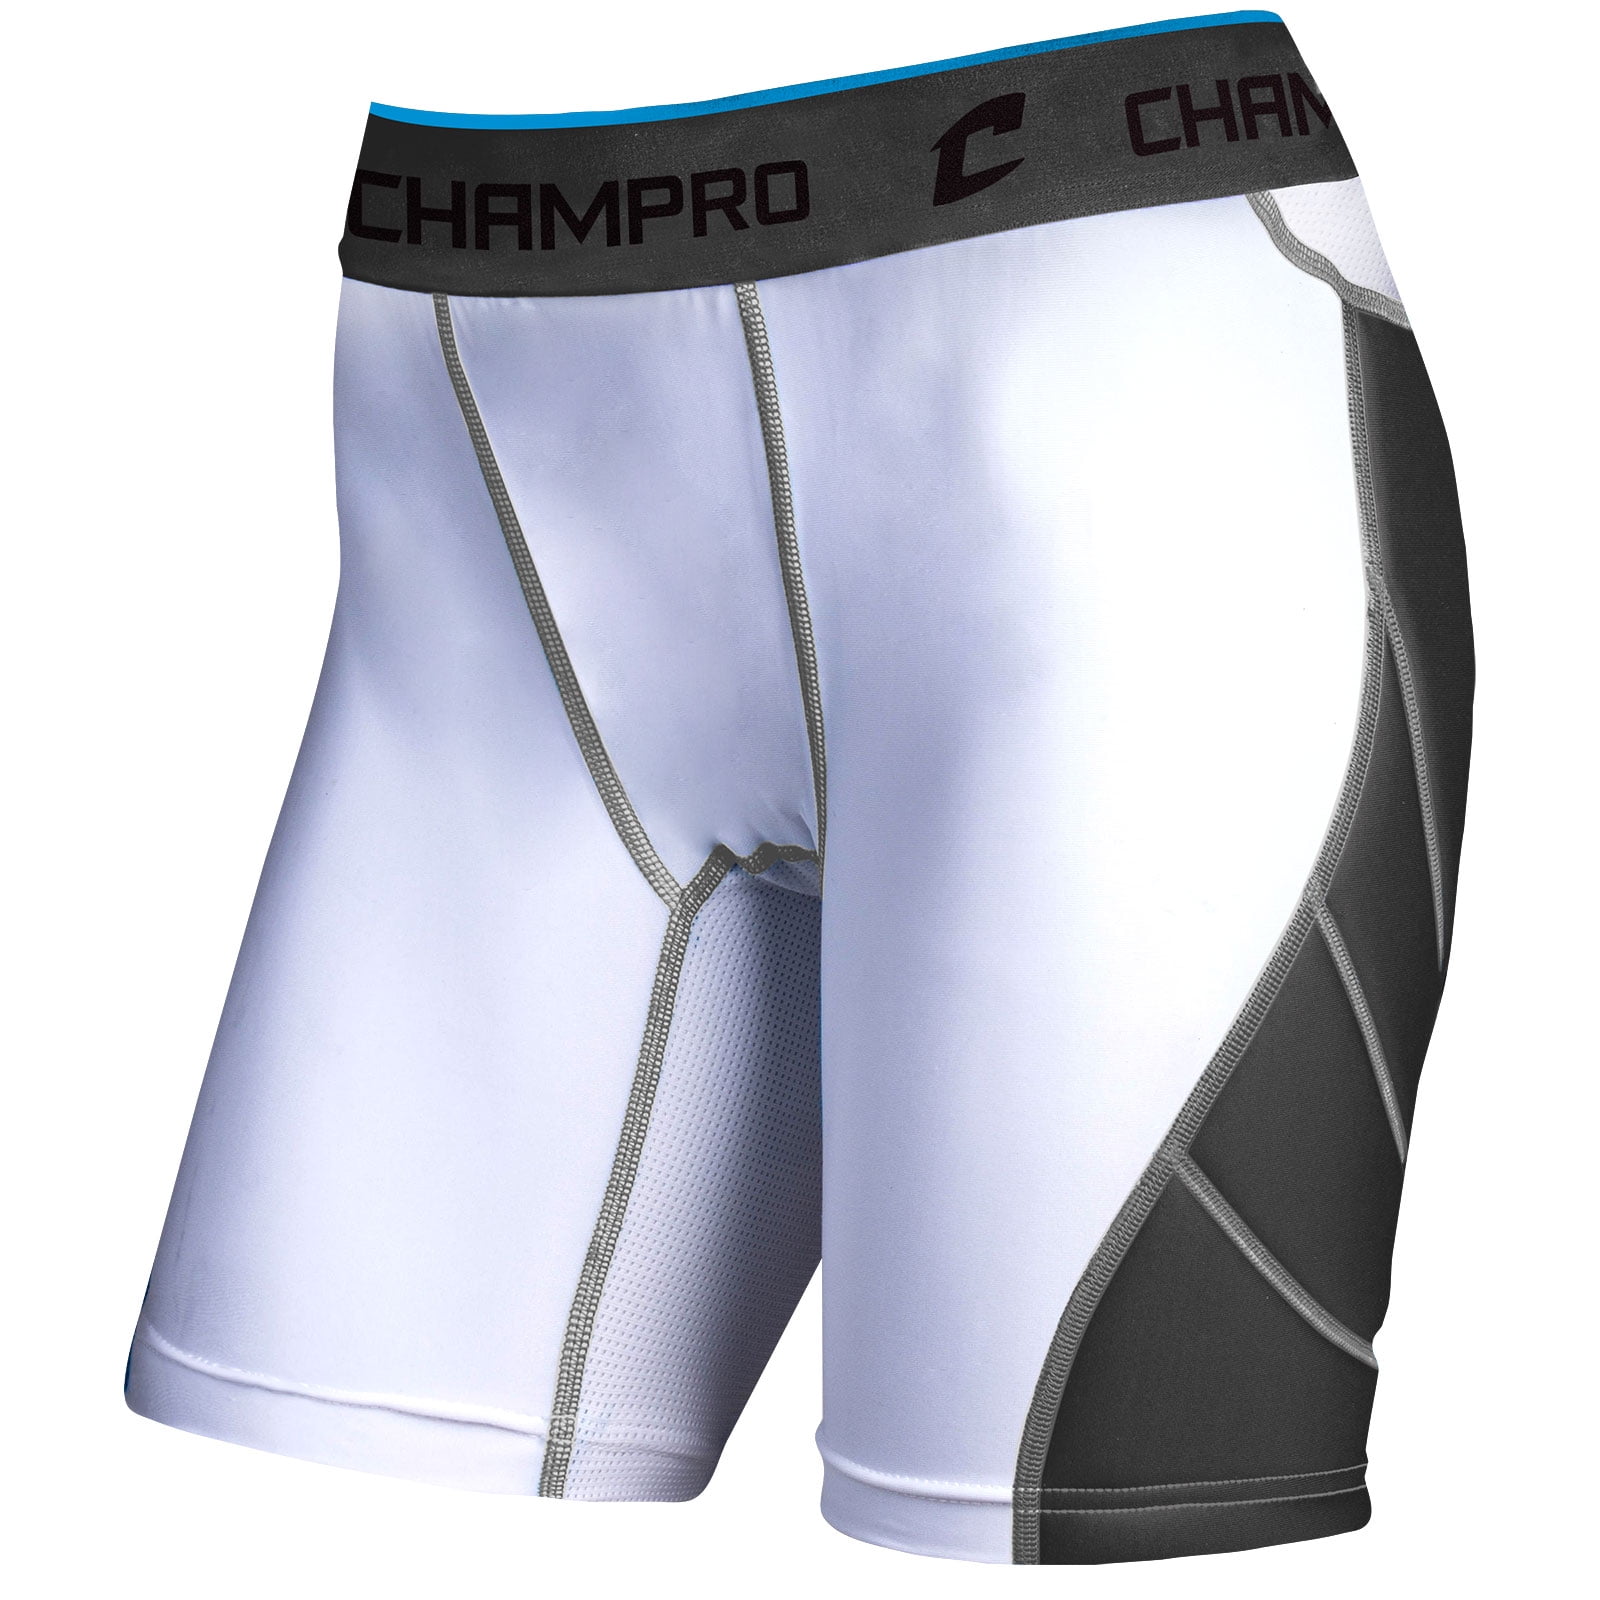 Champro Women's Dri-Gear sliding shorts various colors and sizes 